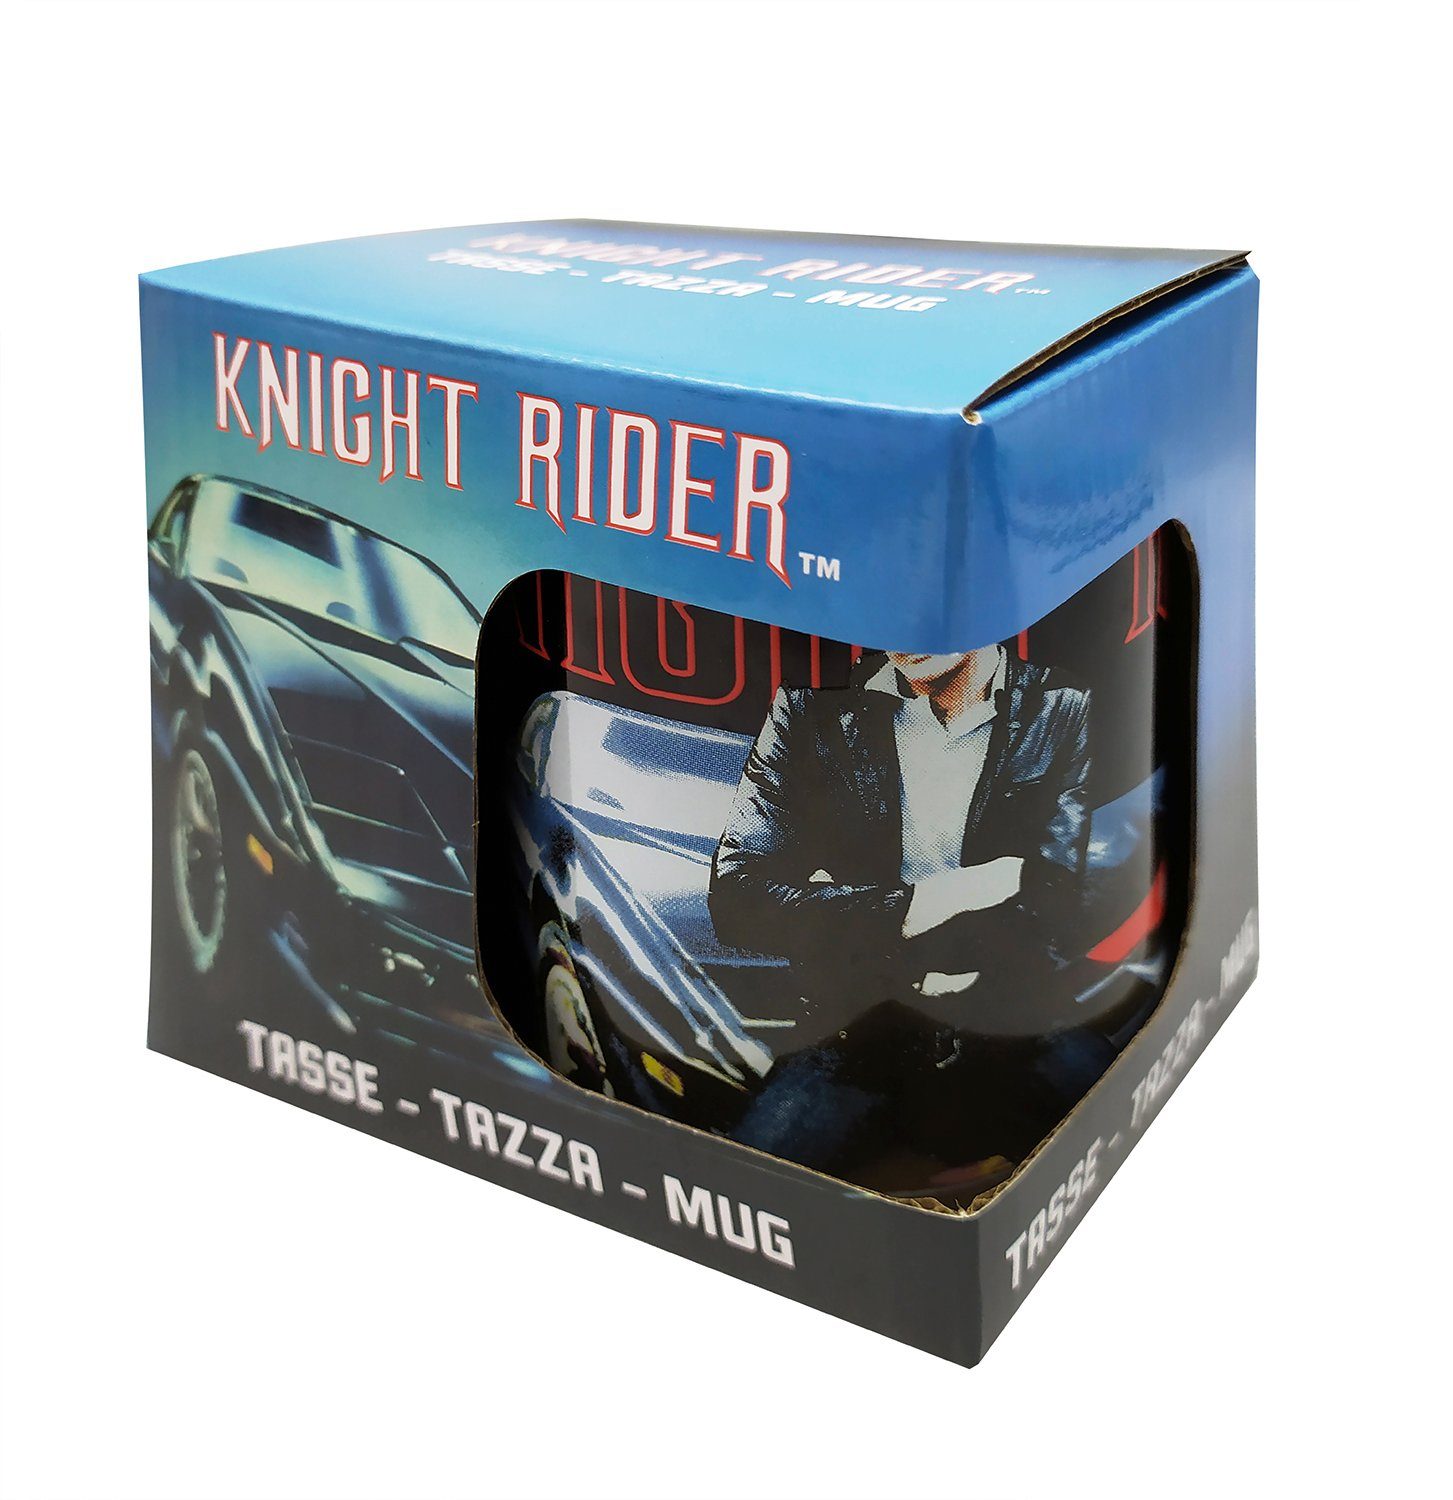 Firebird Joy Rider 1982 Tasse Tasse Knight Pontiac Toy K.I.T.T. Am Trans